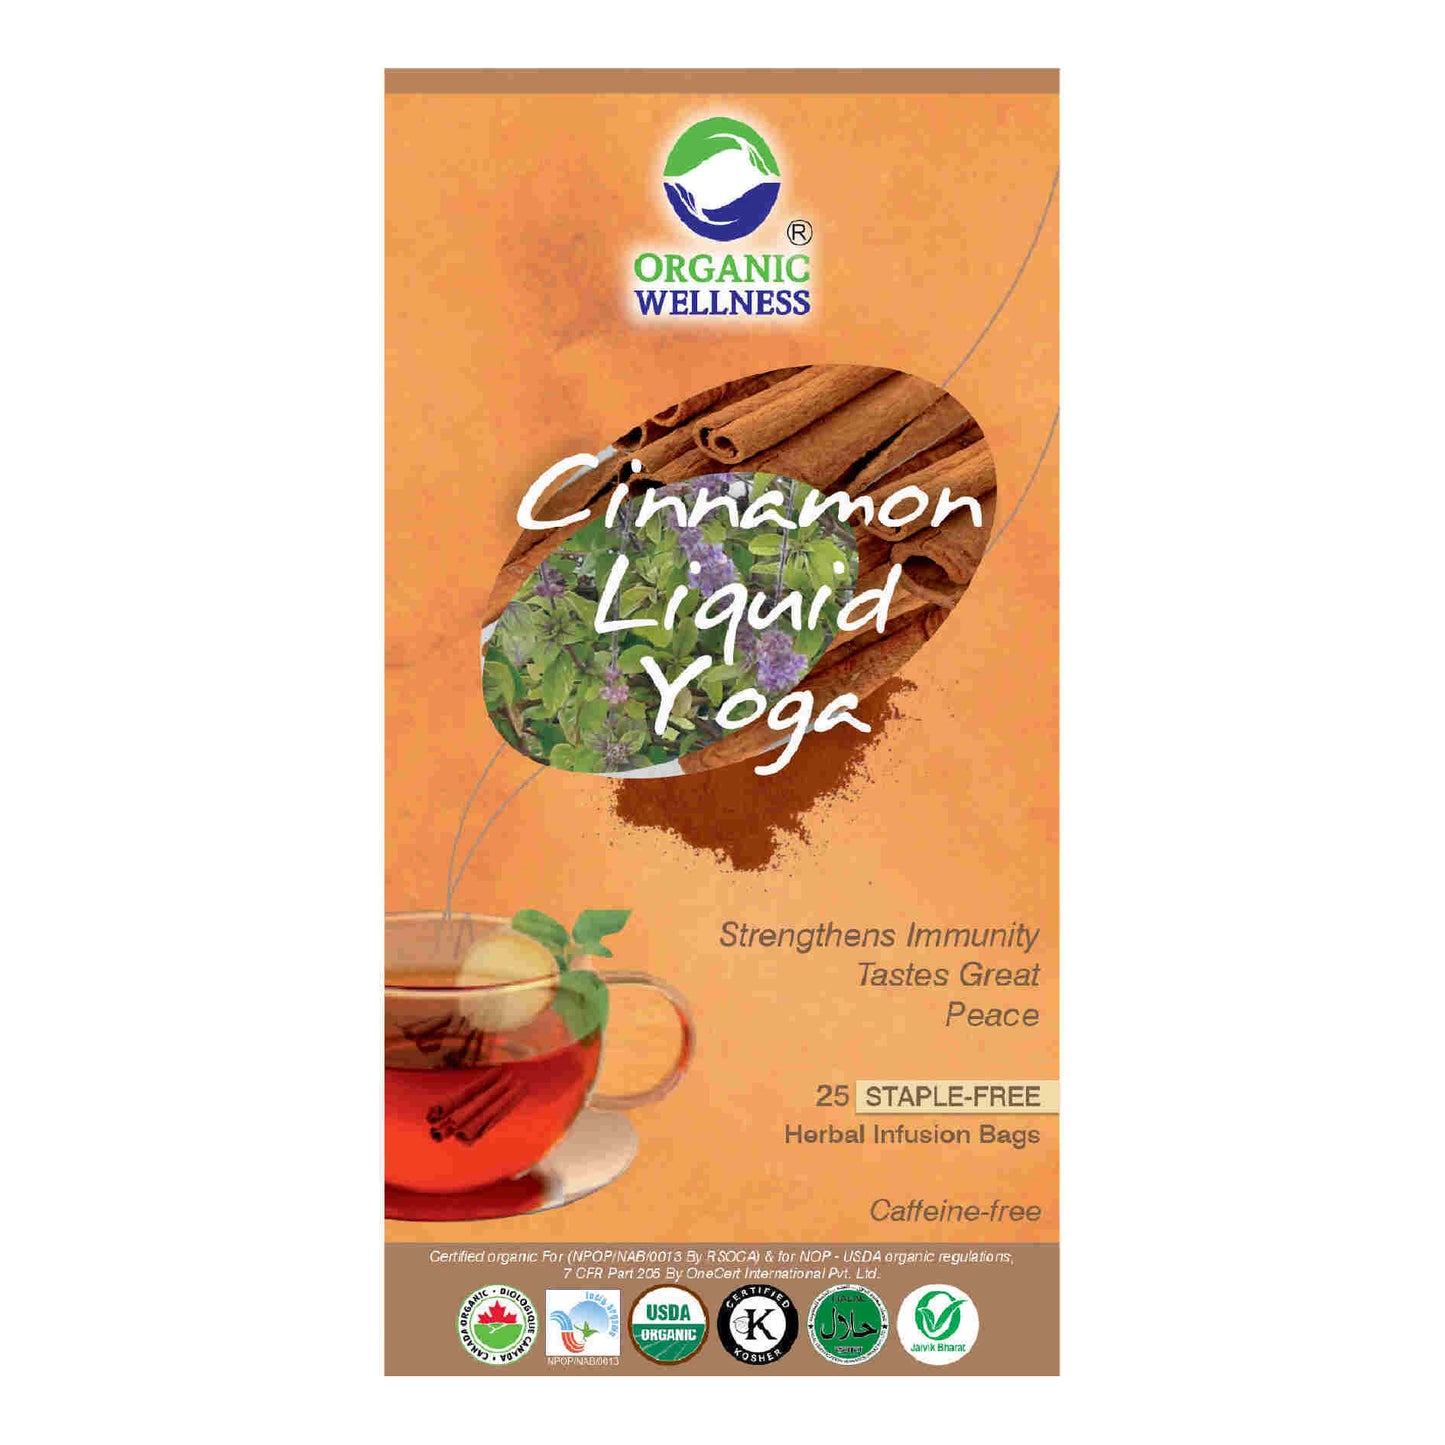 Organic Wellness Cinnamon Liquid Yoga Teabags